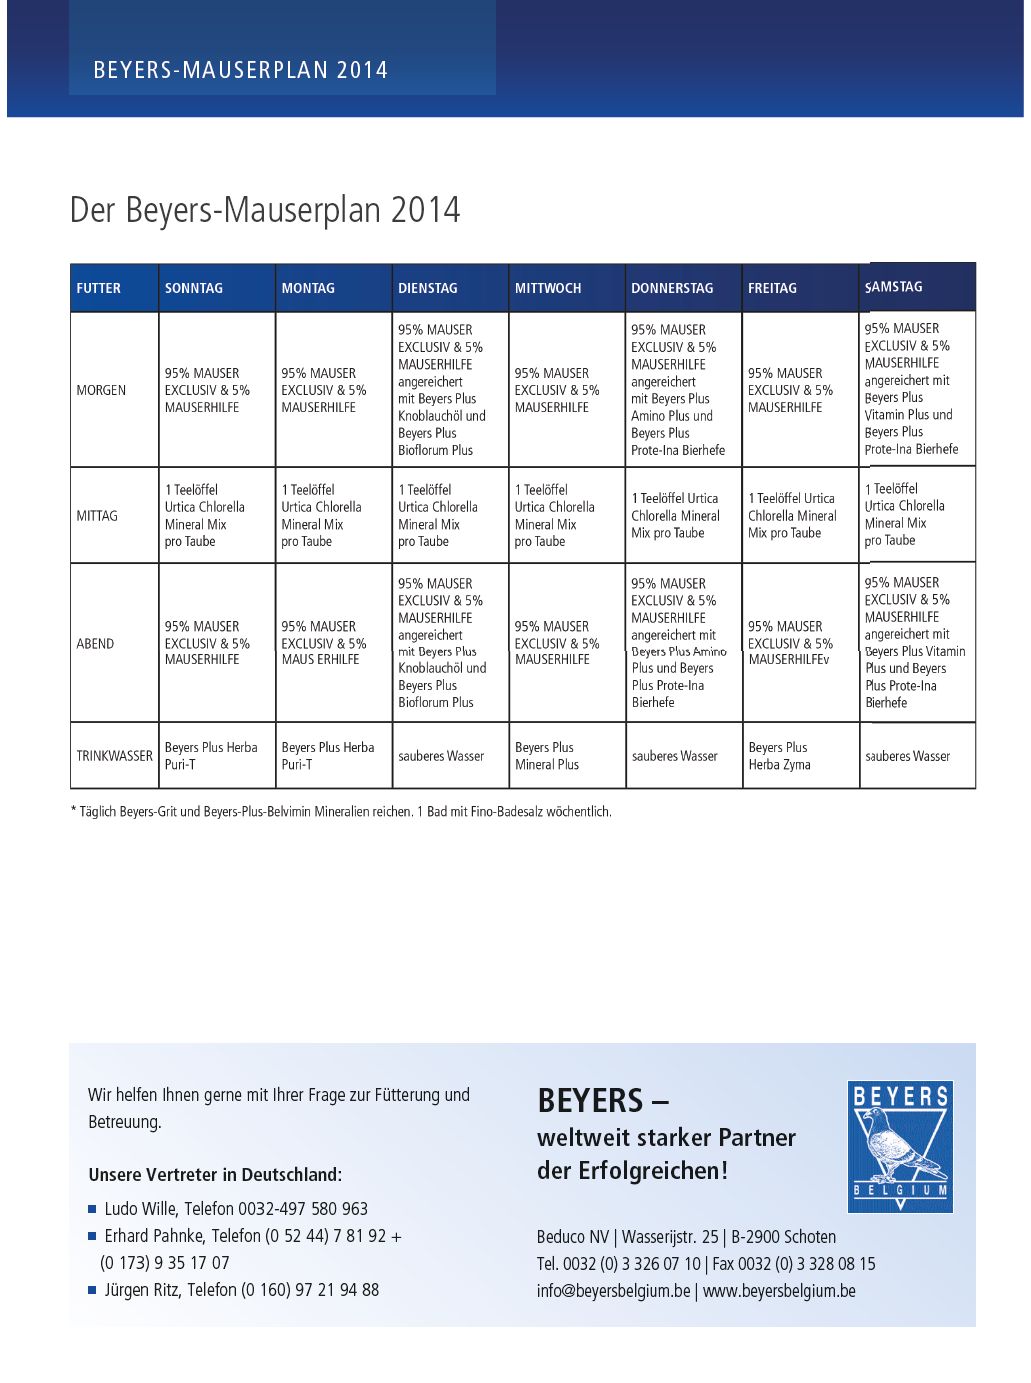 beyers newsletter okt 2014_8